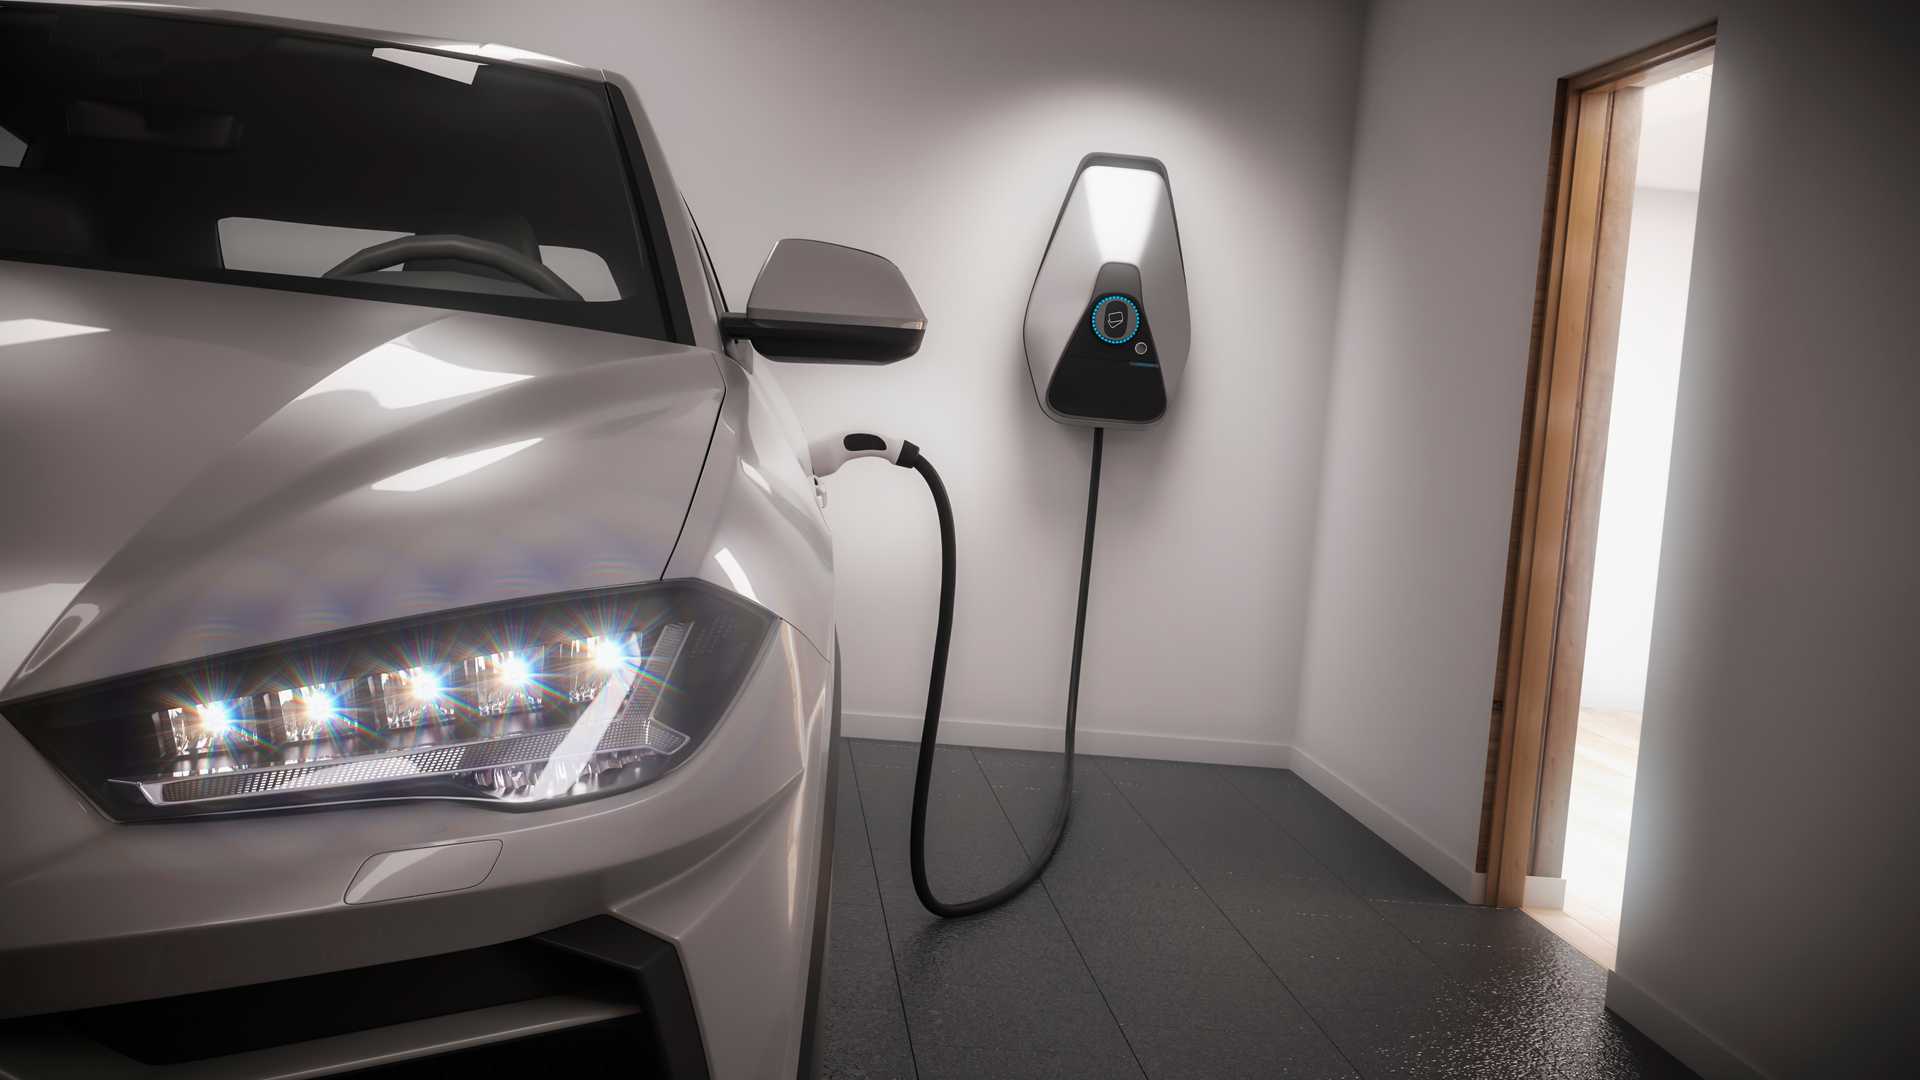 Charging electric car suv in garage illustration